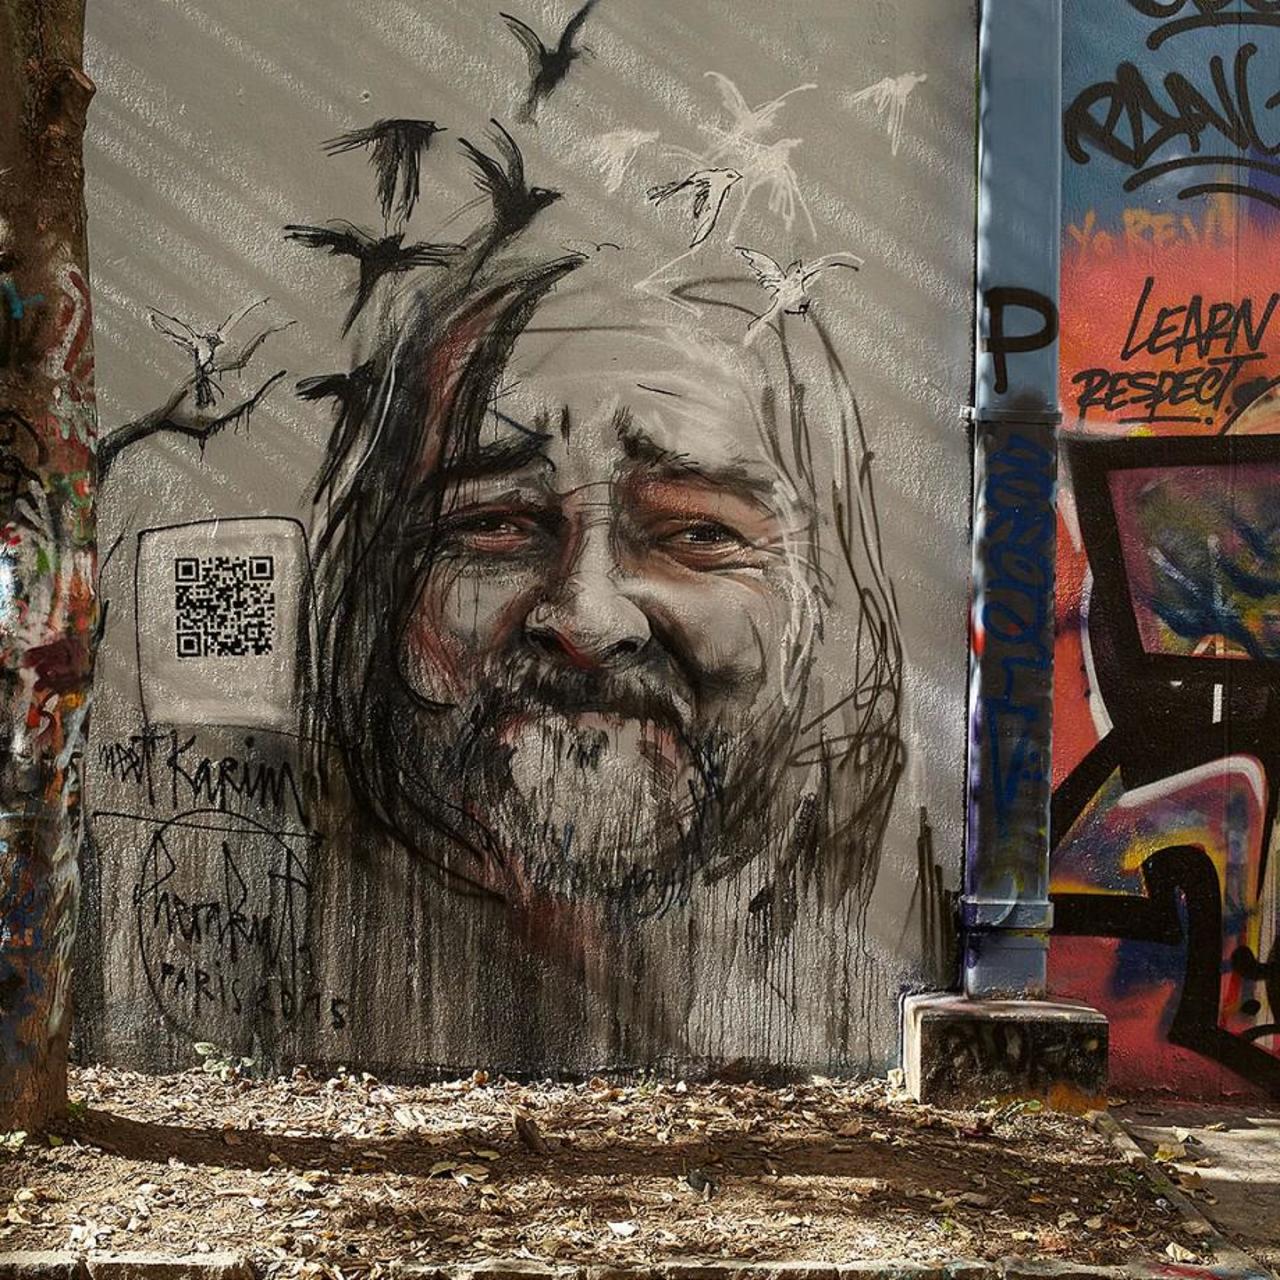 Herakut paints a new piece in Paris for Proj256. #StreetArt #Graffiti #Mural http://t.co/CmCUaIDq2J